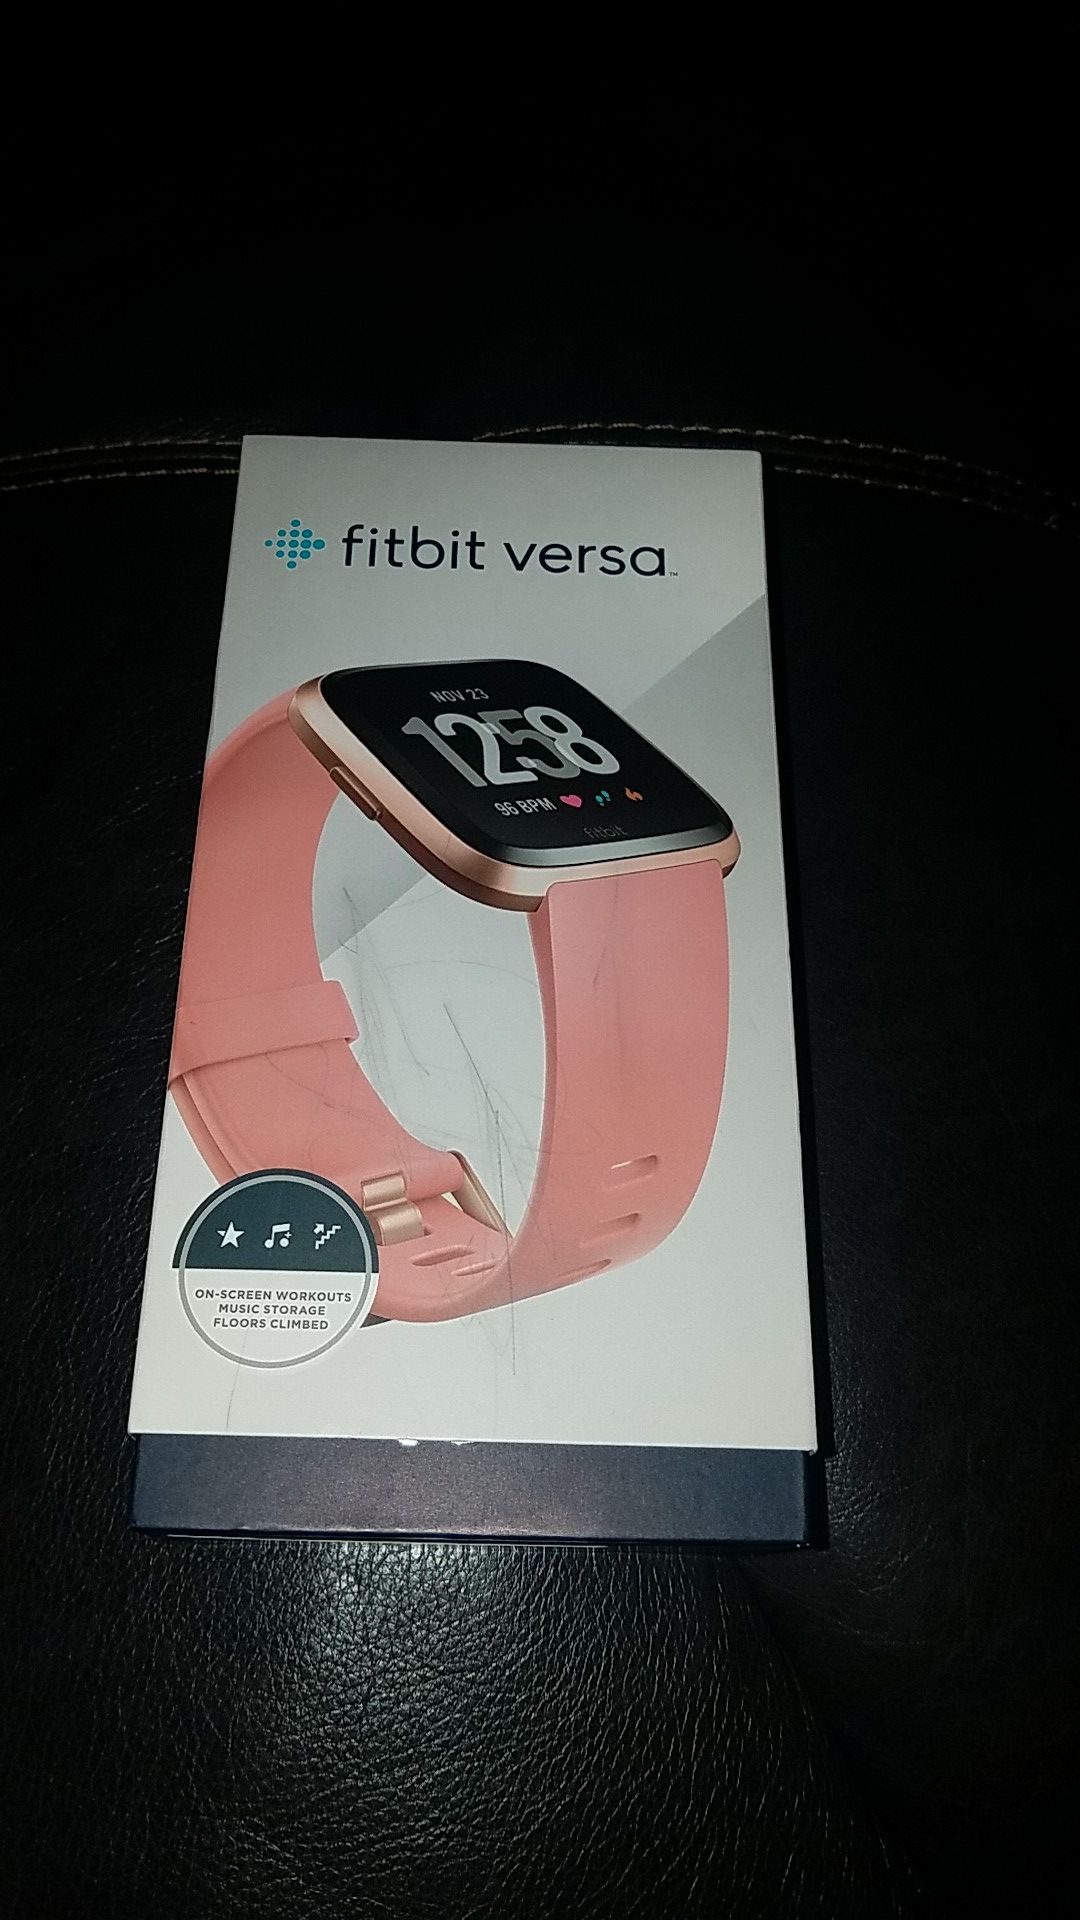 Fitbit Versa fitness/music/multi task watch.